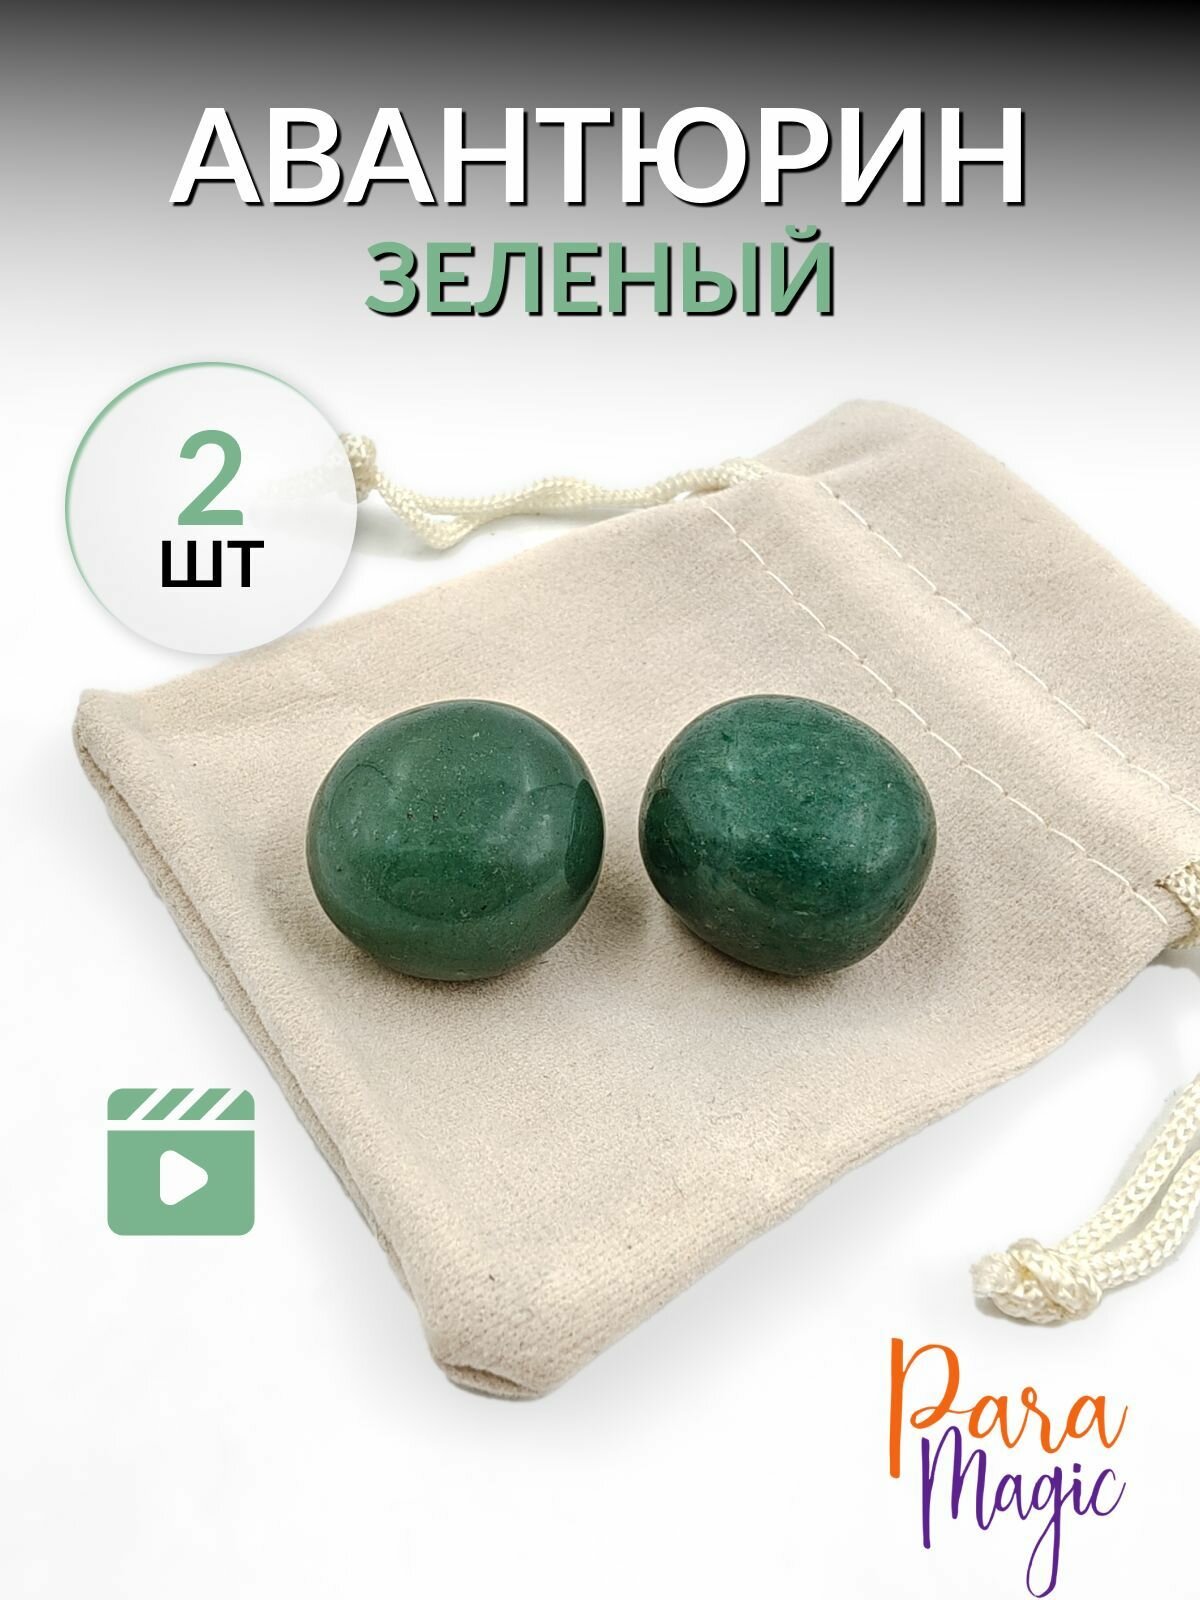 Натуральный камень Авантюрин зеленый, 2шт, размер камня: 1,5-2,5см